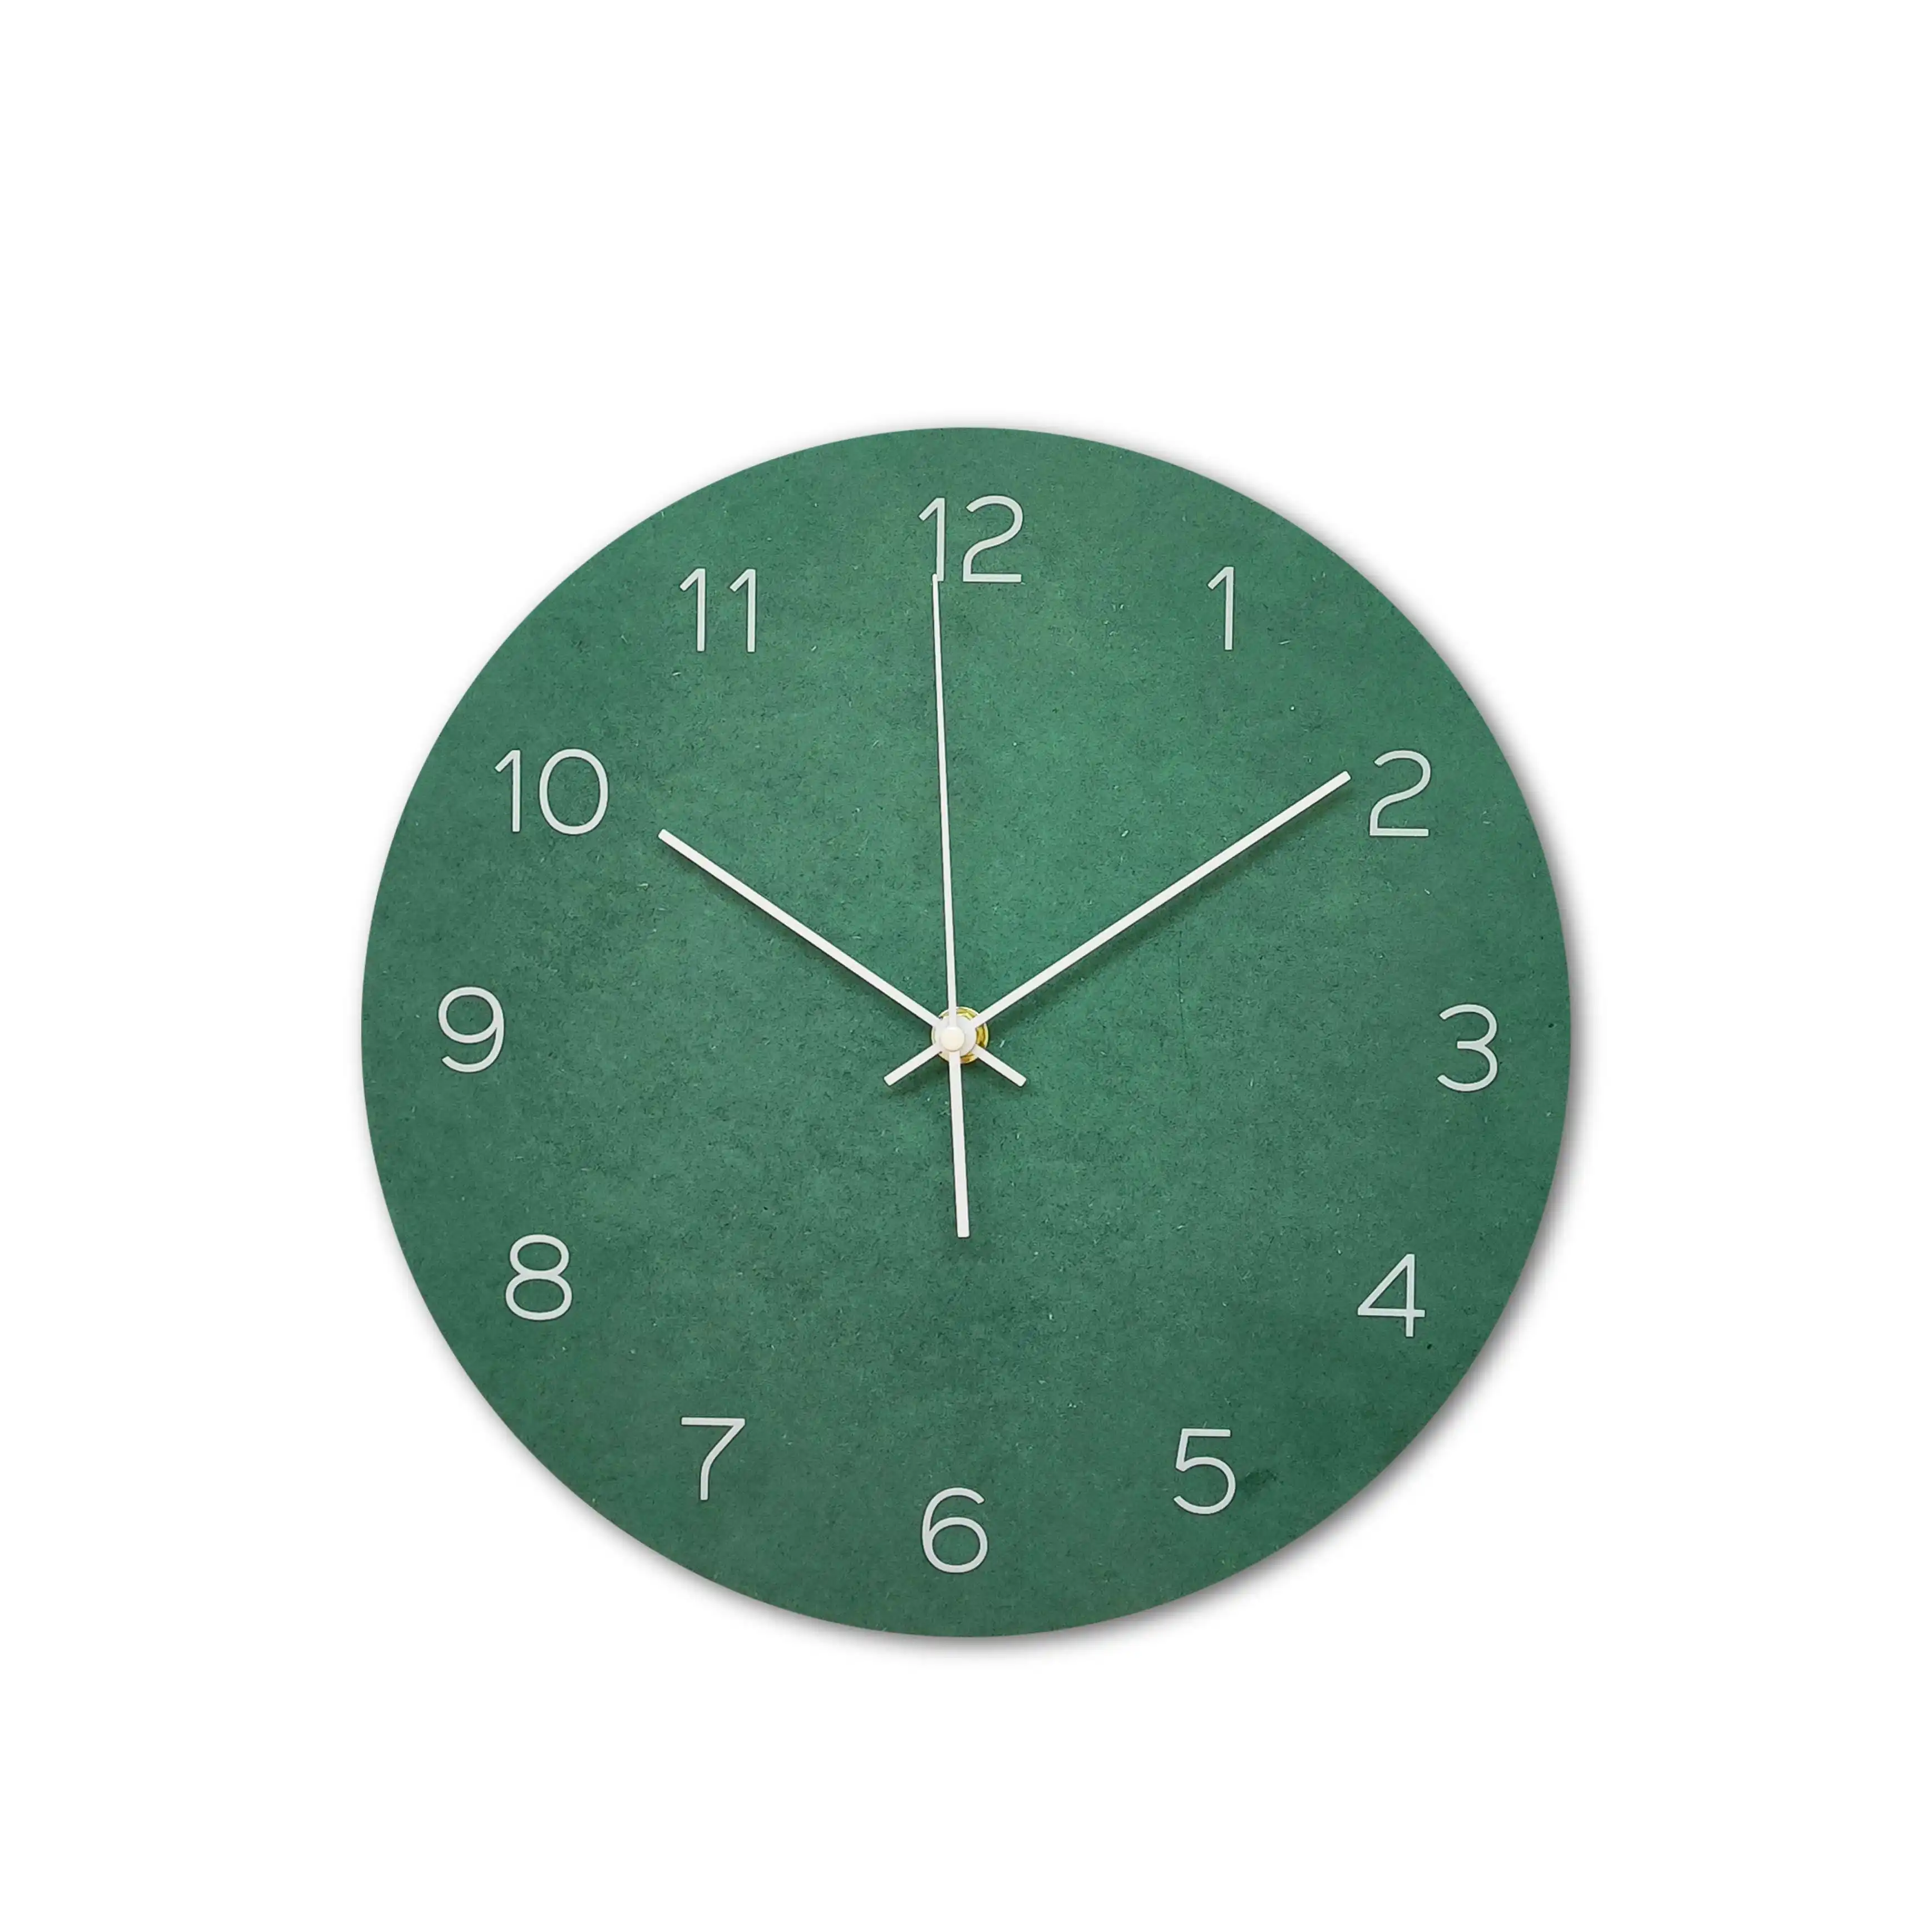 Wood Clock 12 Inches Customized Quartz Round Brief Number MDF Wooden Grass Green Wall Clock Analog Wanduhr Seina Kell